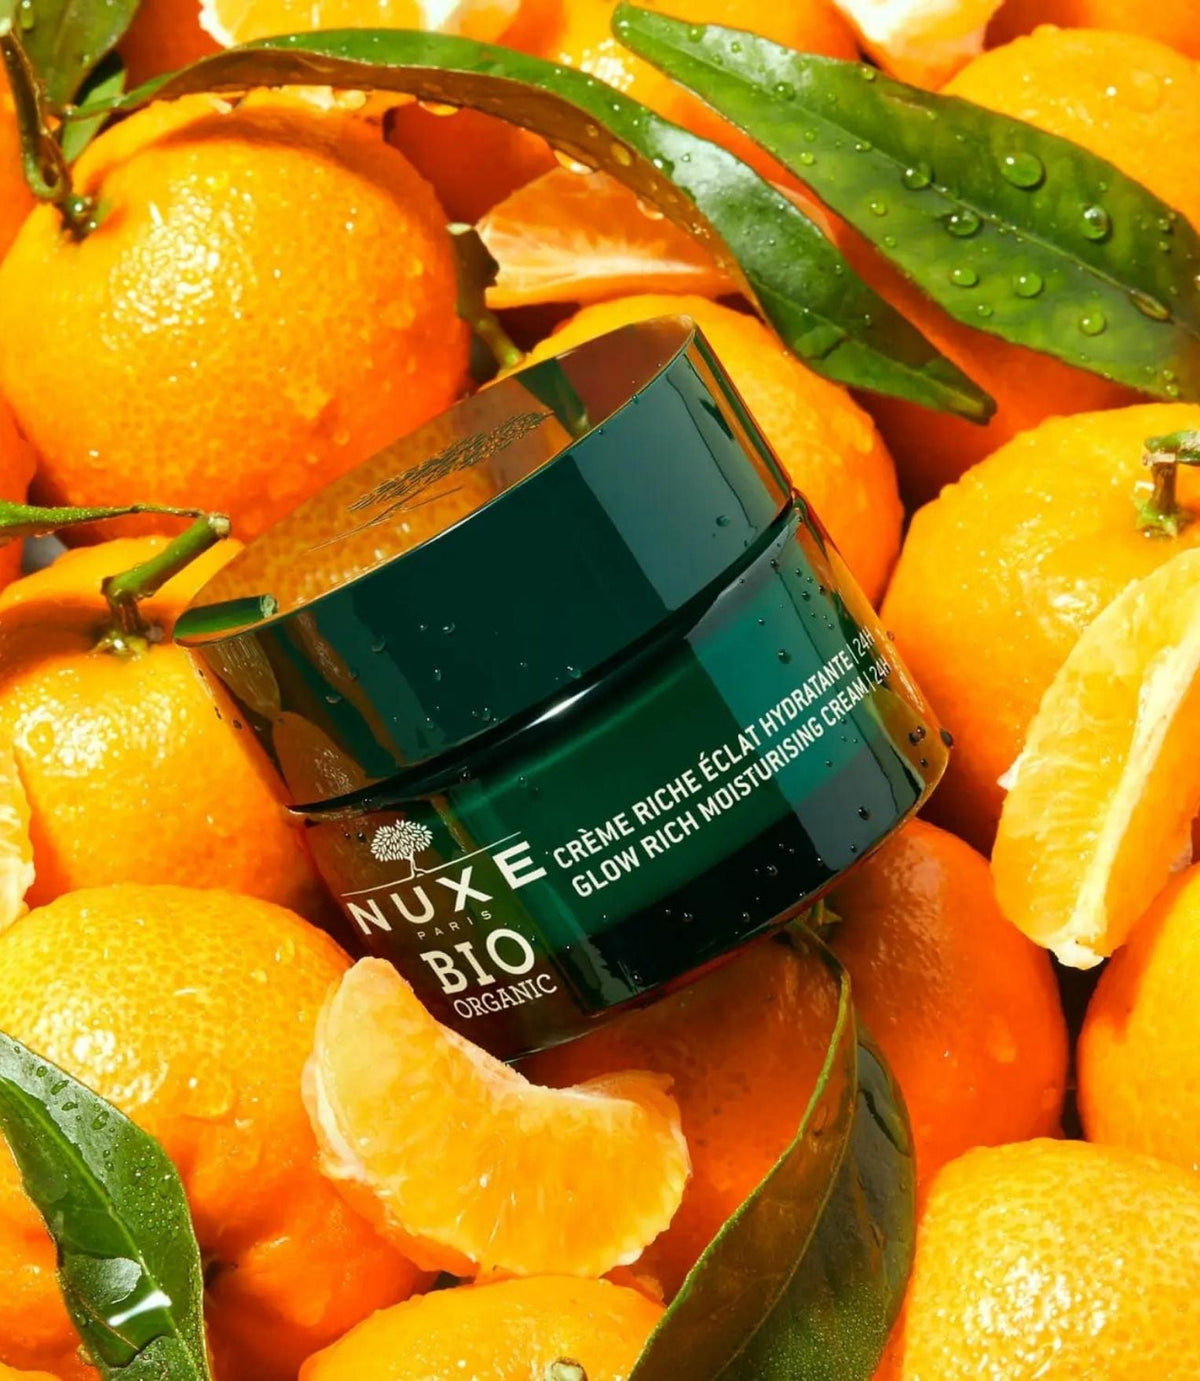 Nuxe Bio Citrus Cells Glow Rich Moisturising Cream 50ml